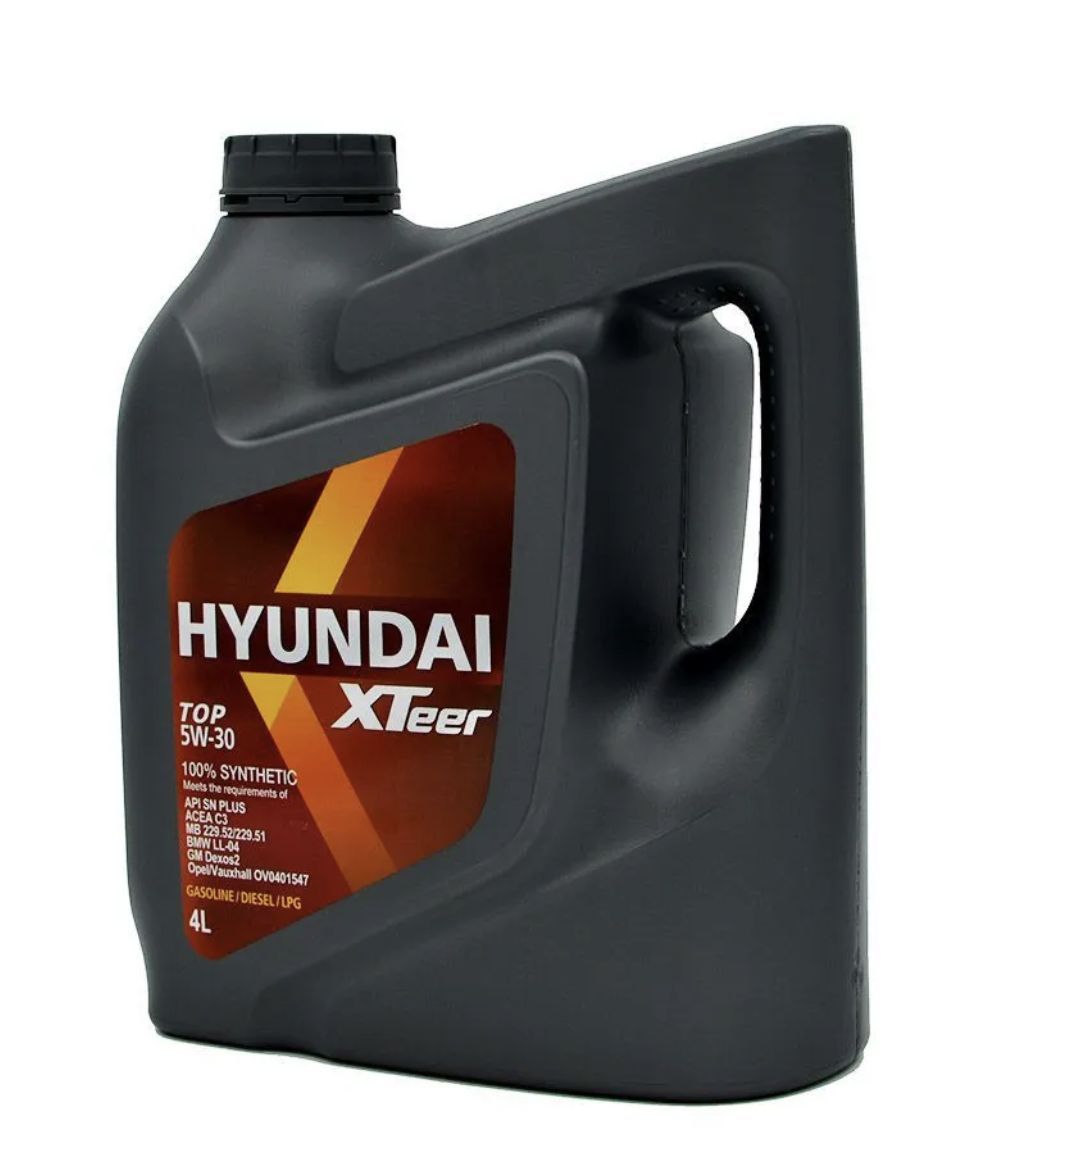 Hyundai xteer 5w 30 отзывы. 1061223 Hyundai XTEER. Hyundai XTEER 1011411. Hyundai XTEER 1051222. Hyundai XTEER масло моторное.